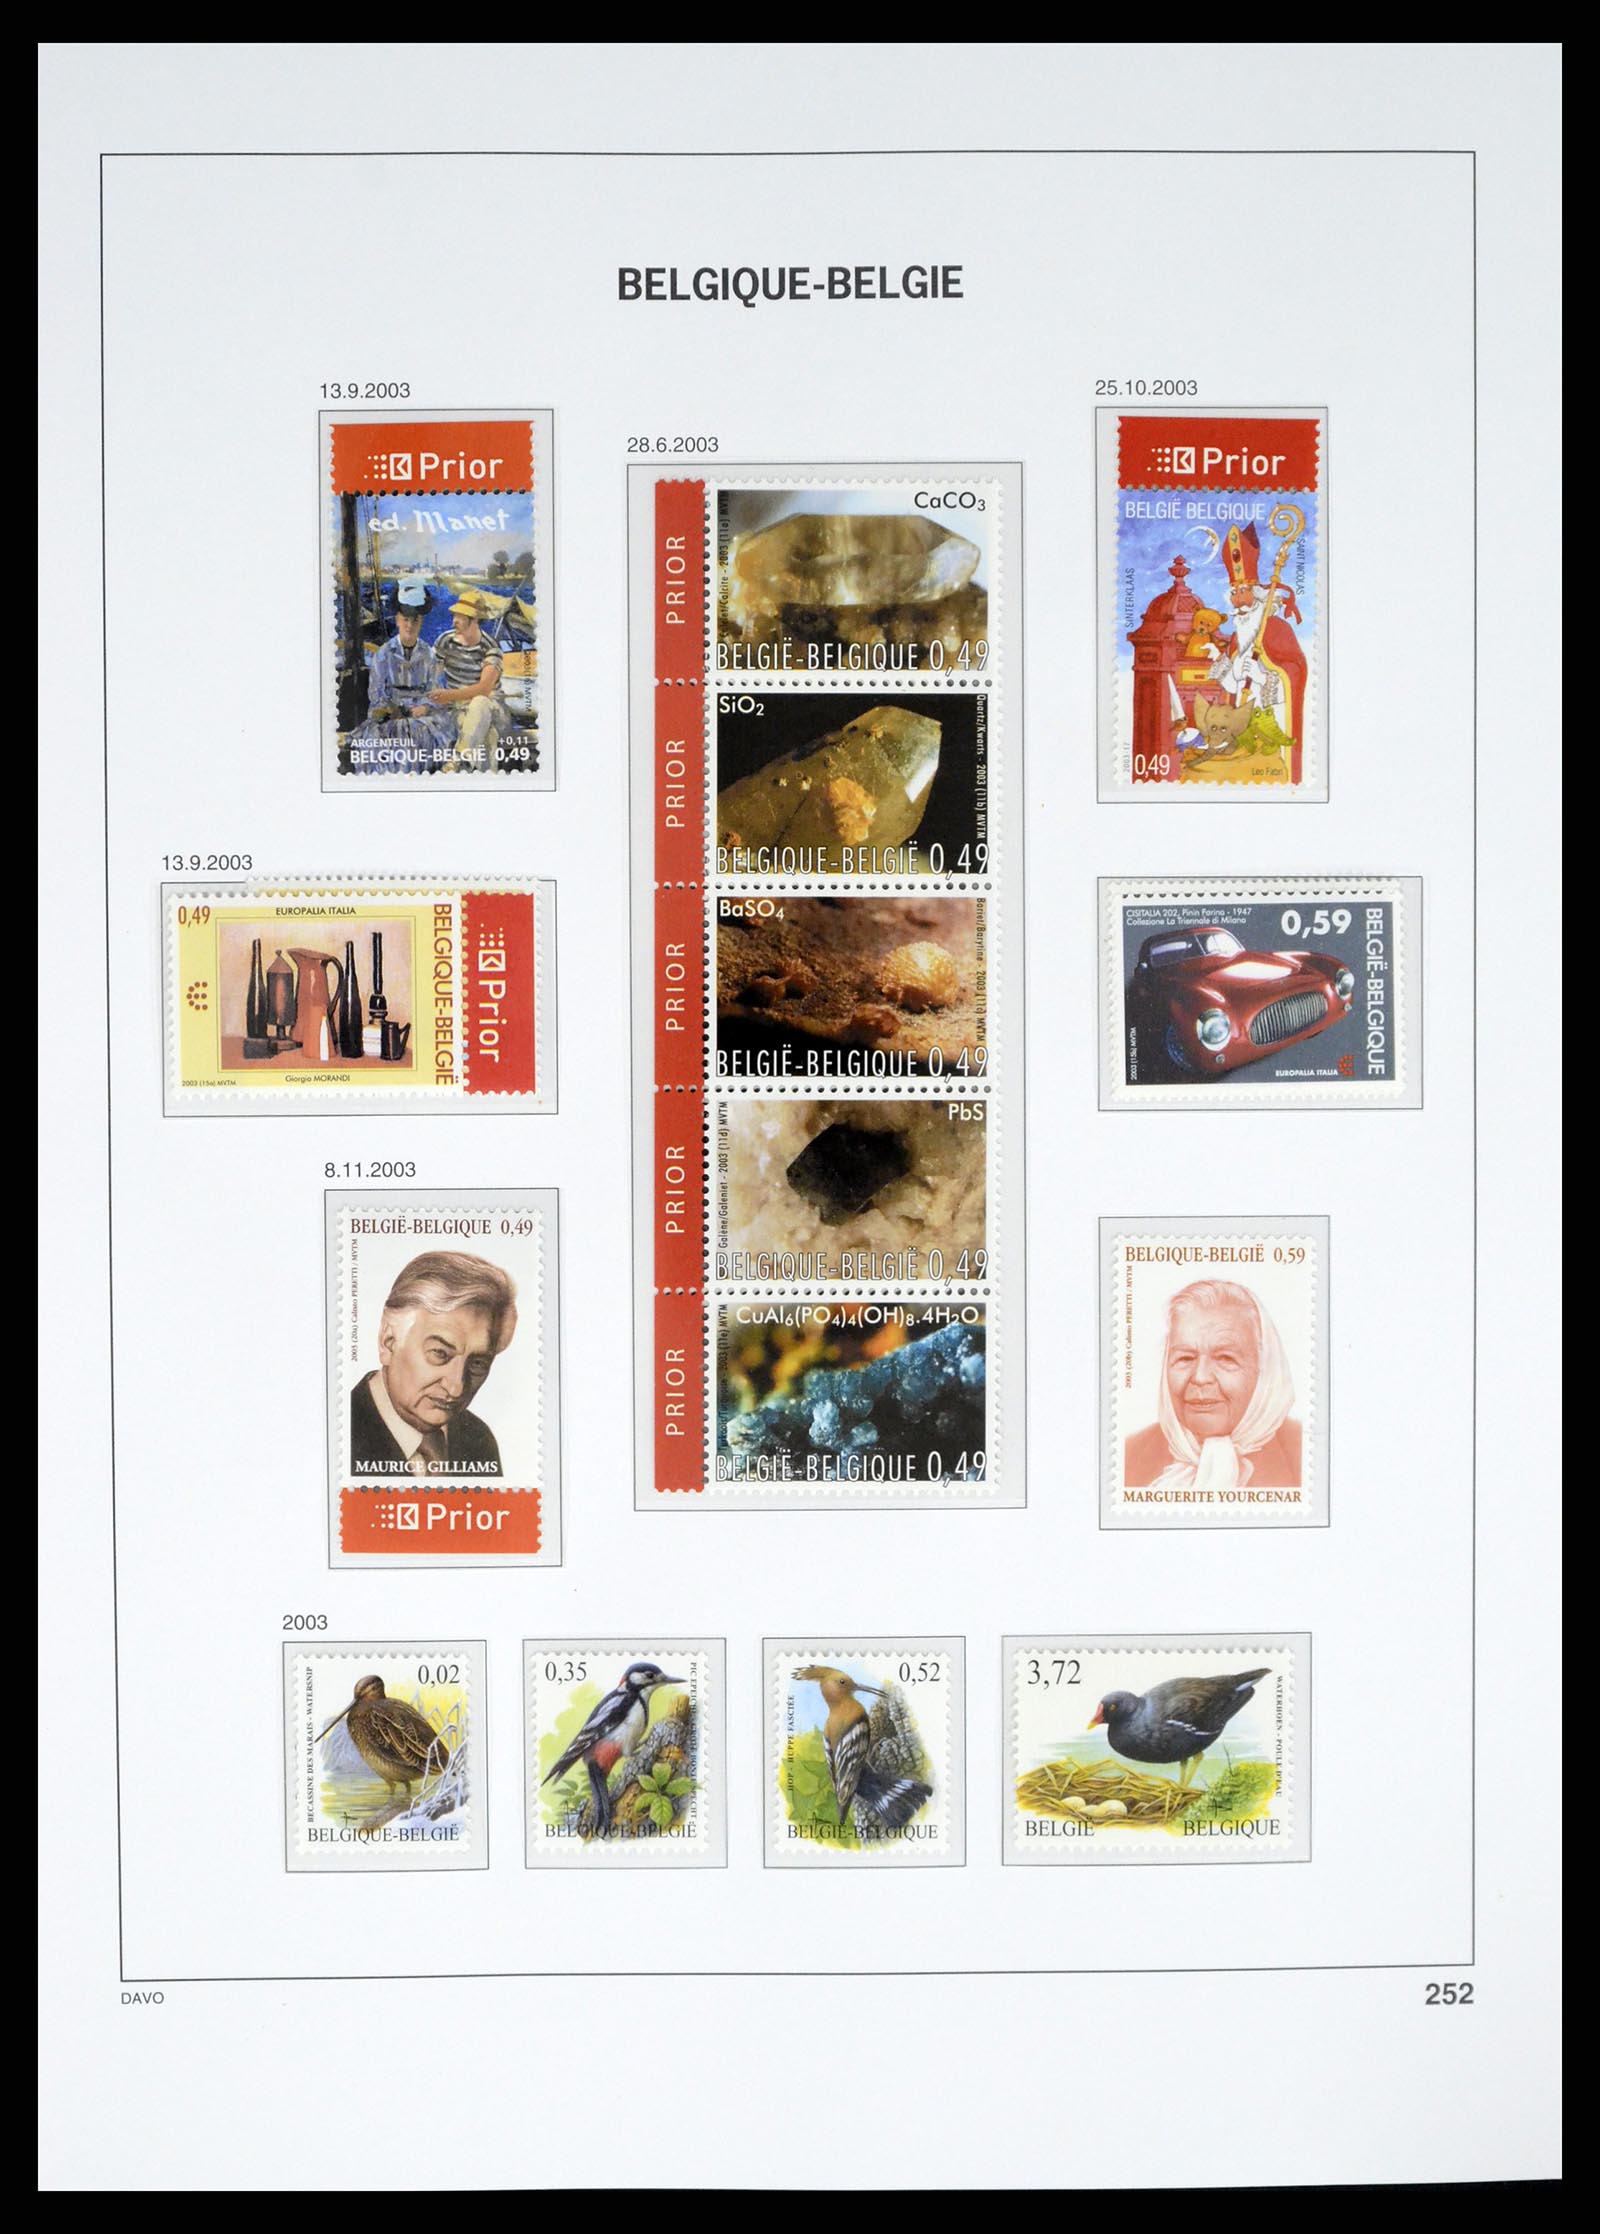 37368 203 - Stamp collection 37368 Belgium 1969-2003.